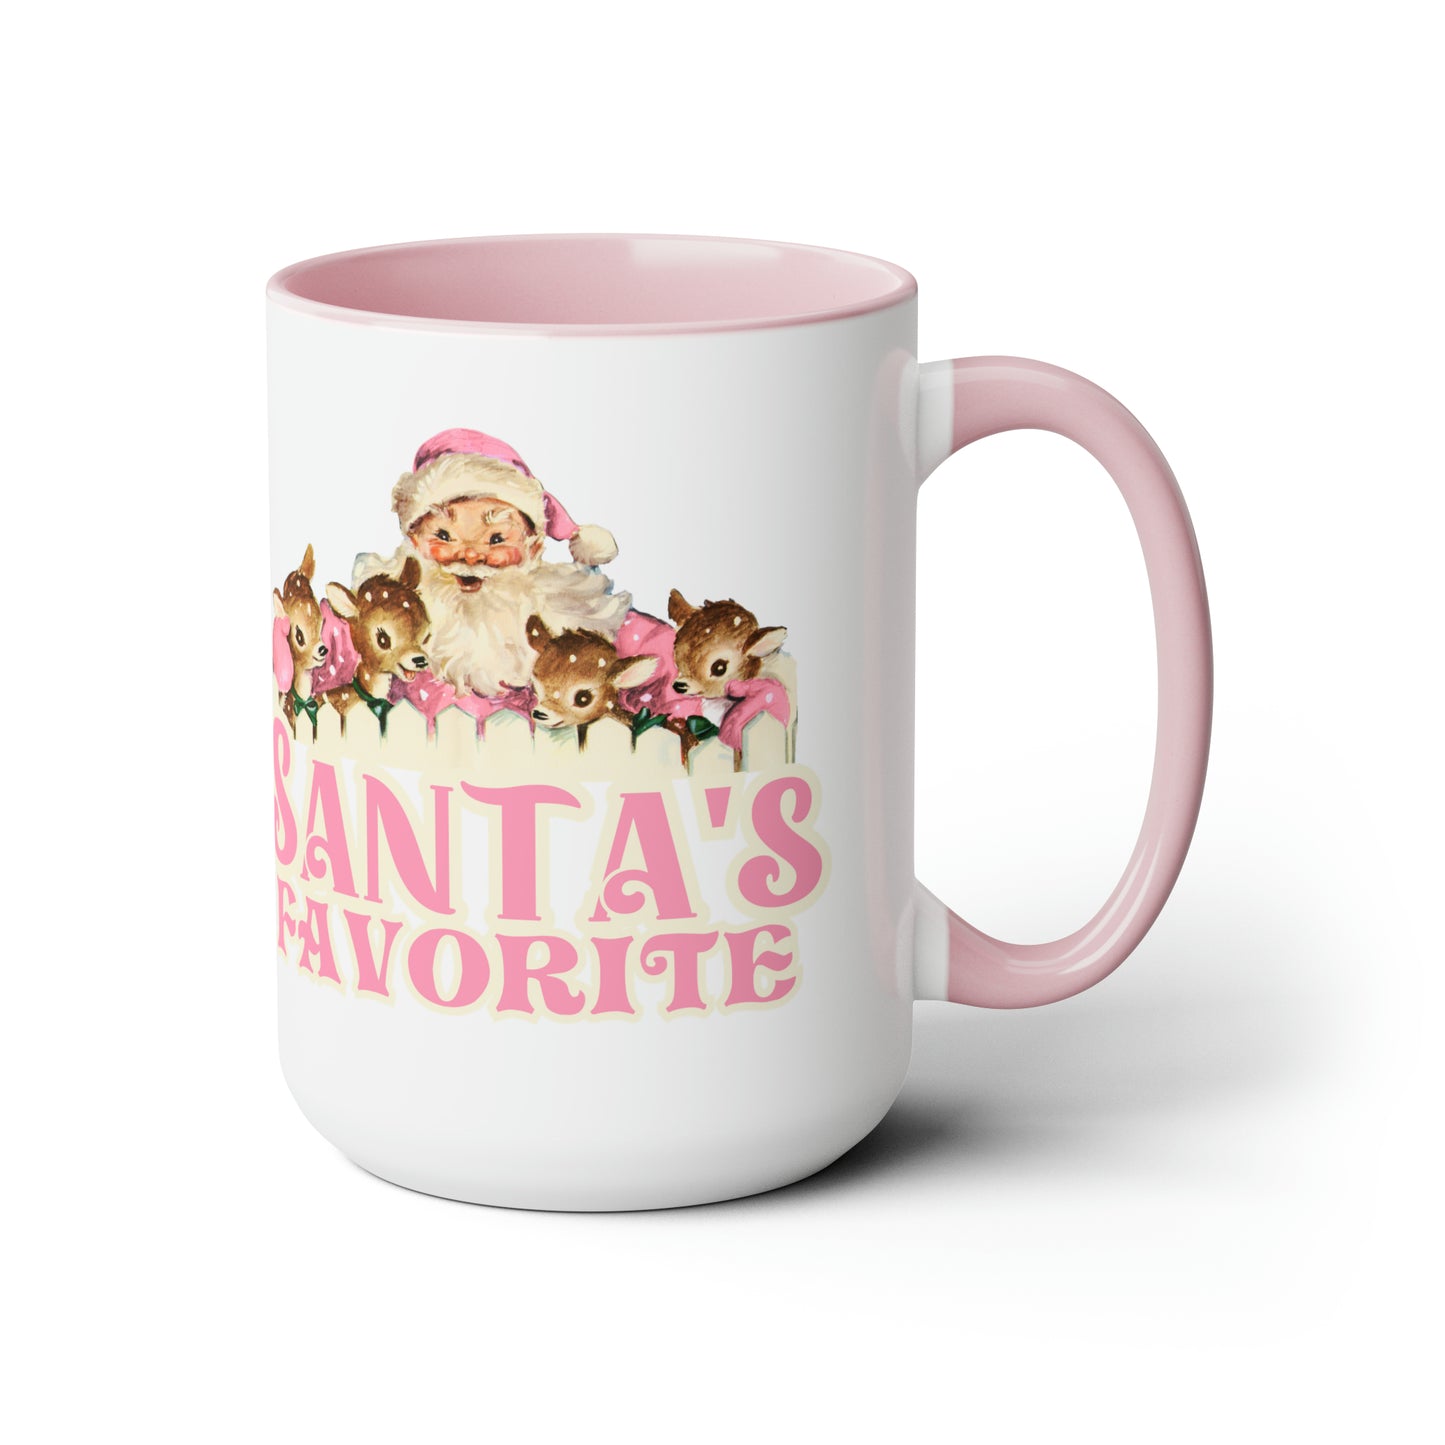 Santa's Favorite - Coffee Mug